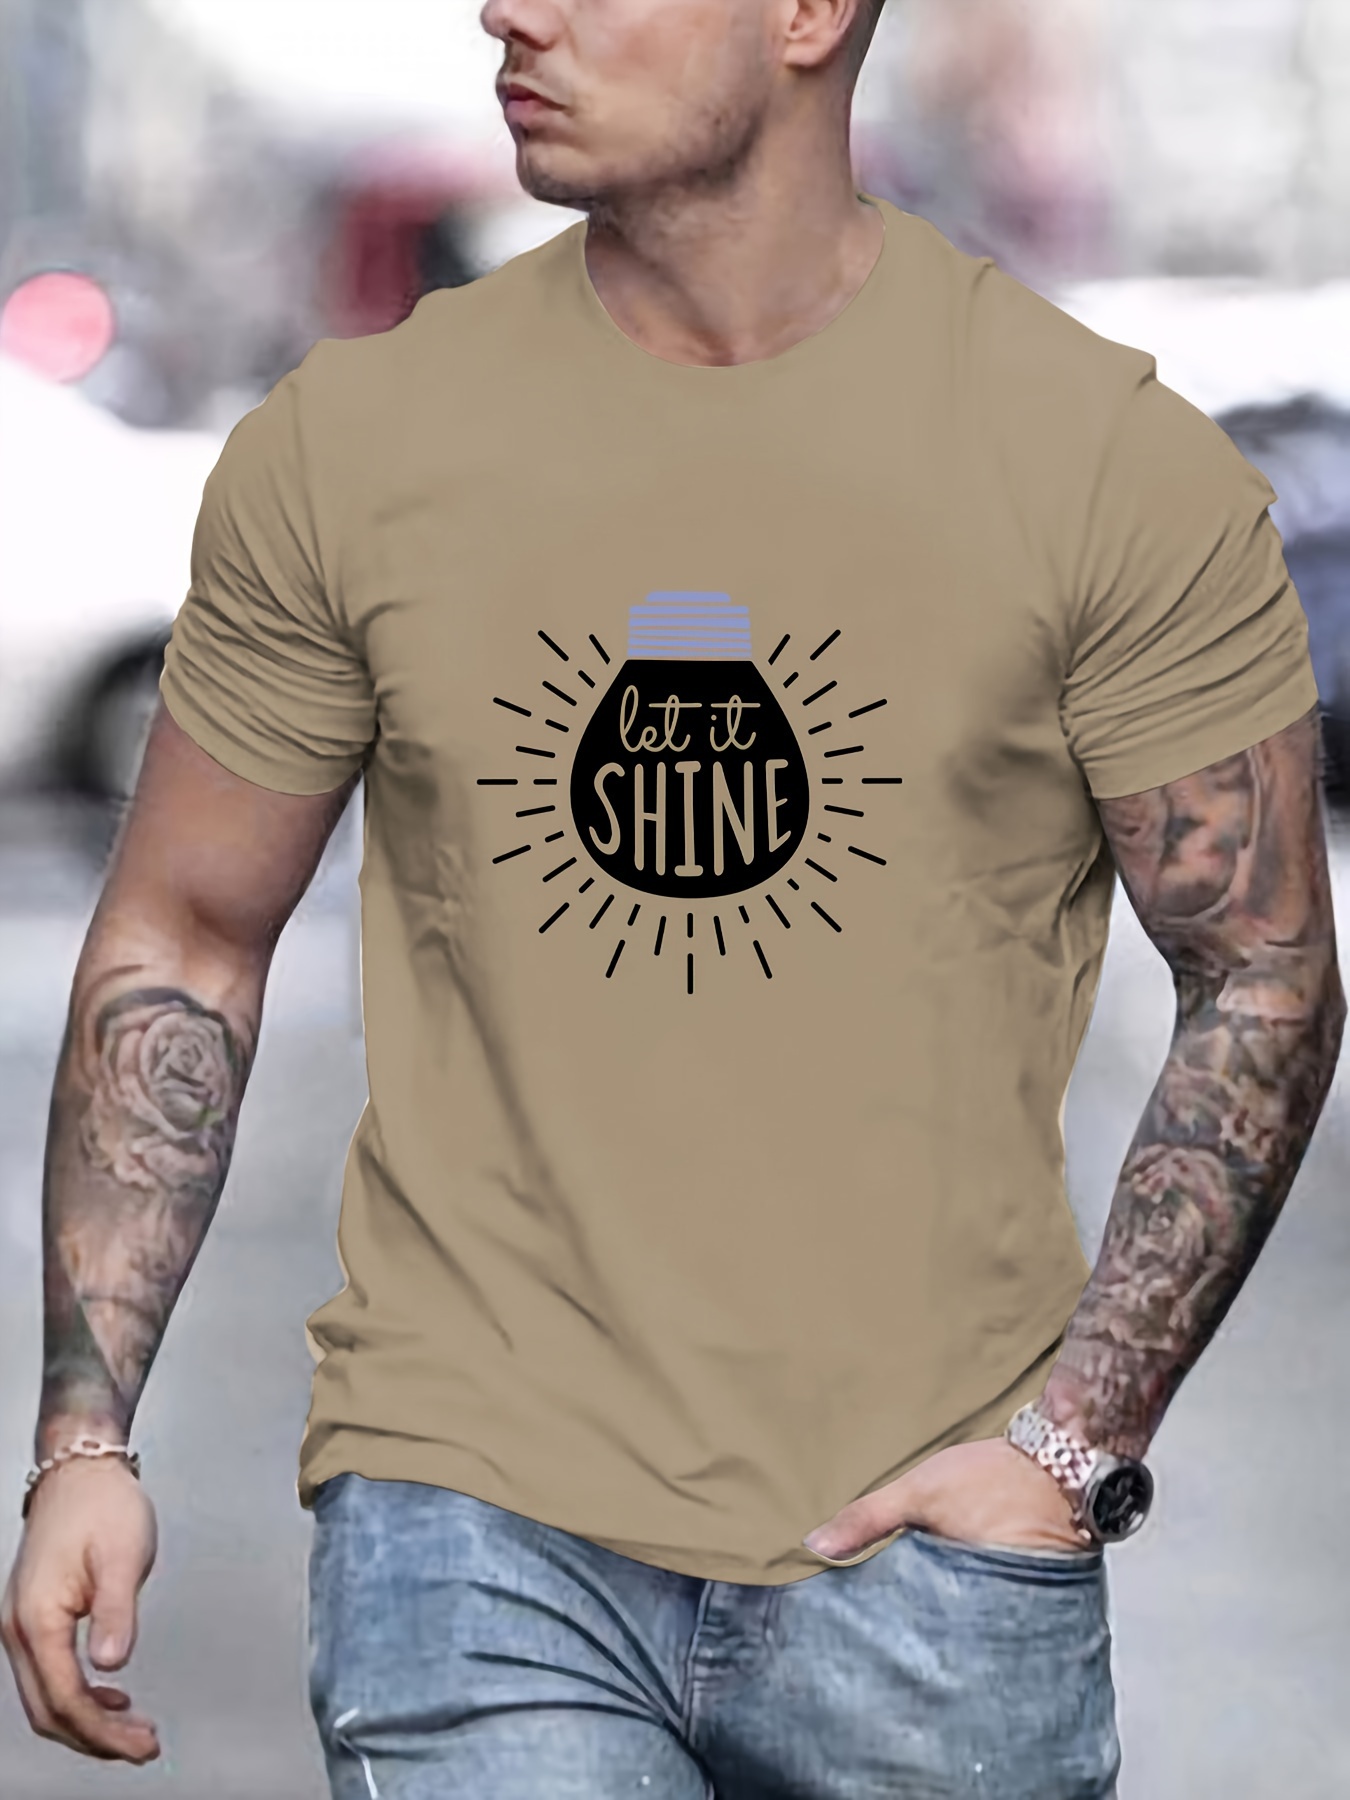 Shine - T- Shirt for Men